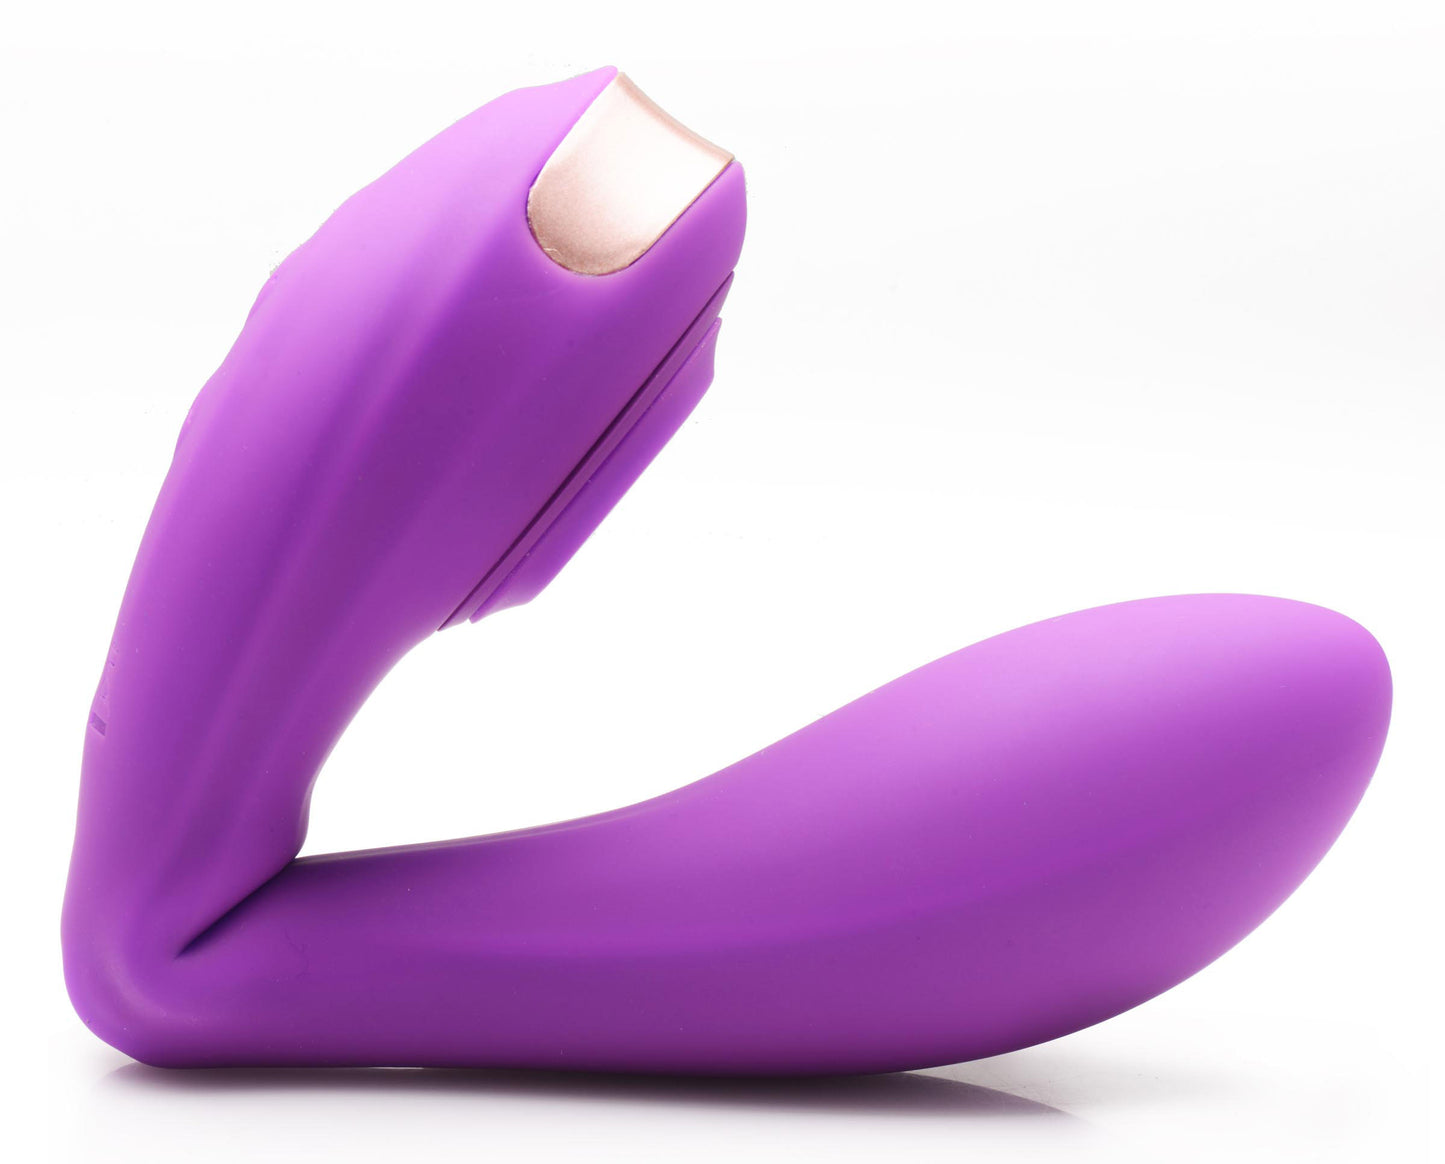 Pose Plus - 10x Pulsing Bendable Silicone Vibrator - Purple